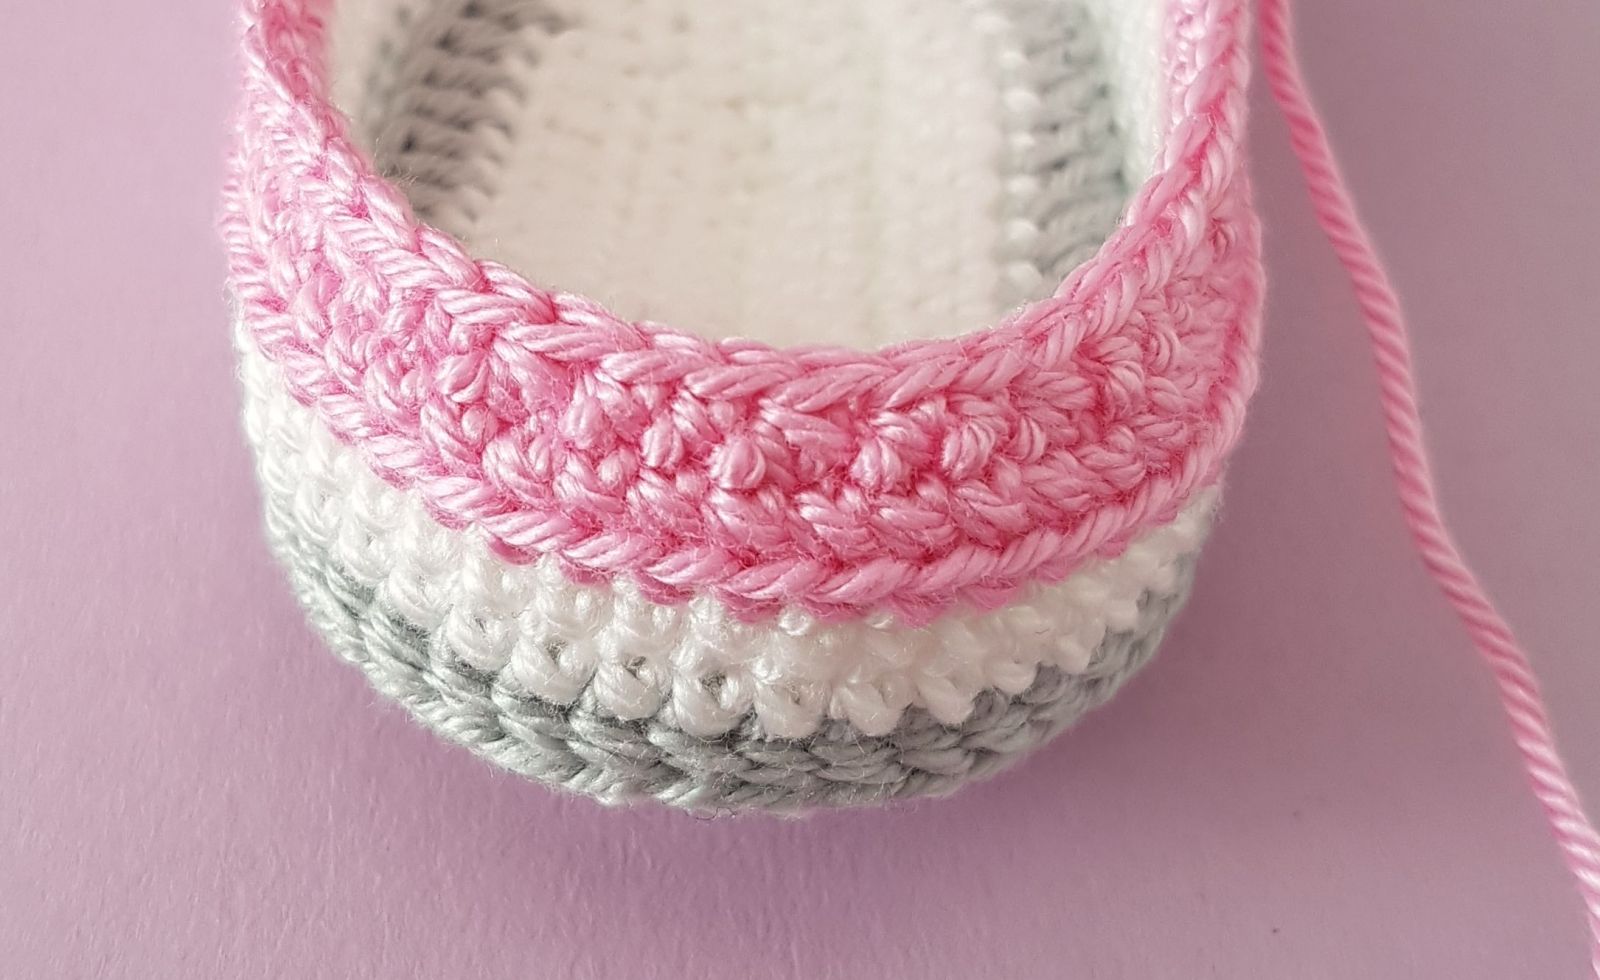 Free Crochet Pattern Baby Shoes